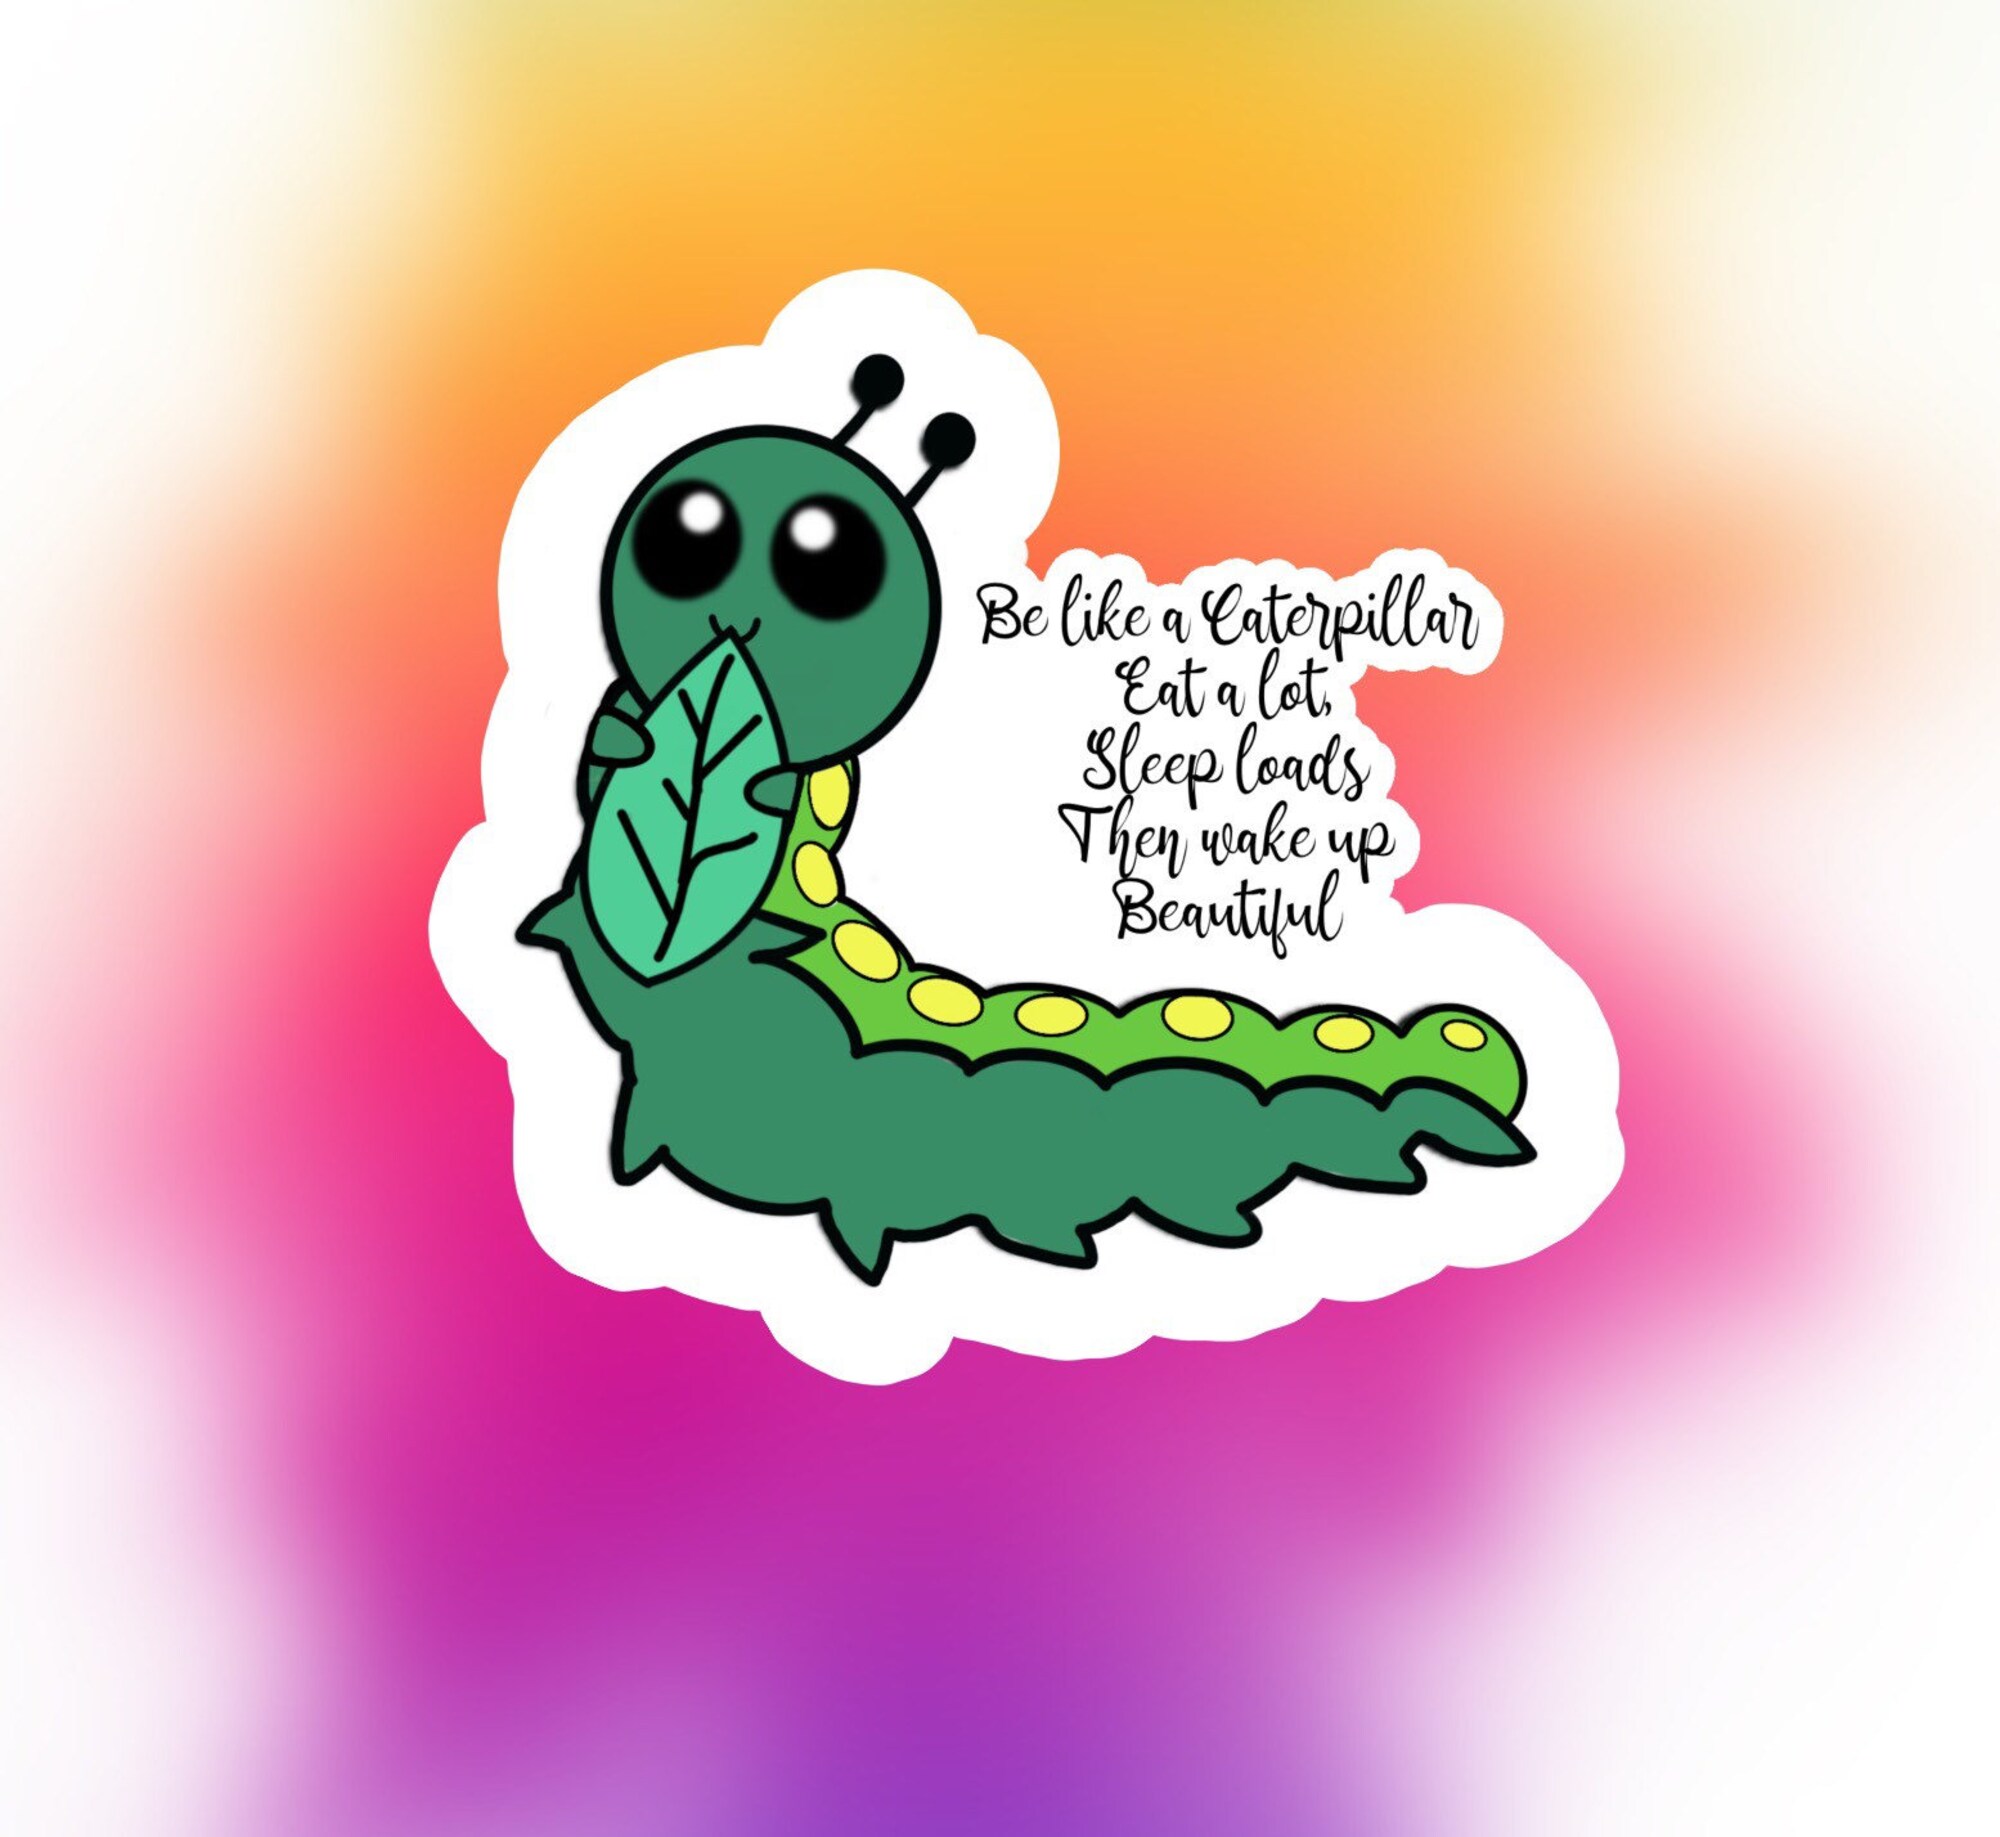 Caterpillar Be Beautiful Sticker, Waterproof Sticker